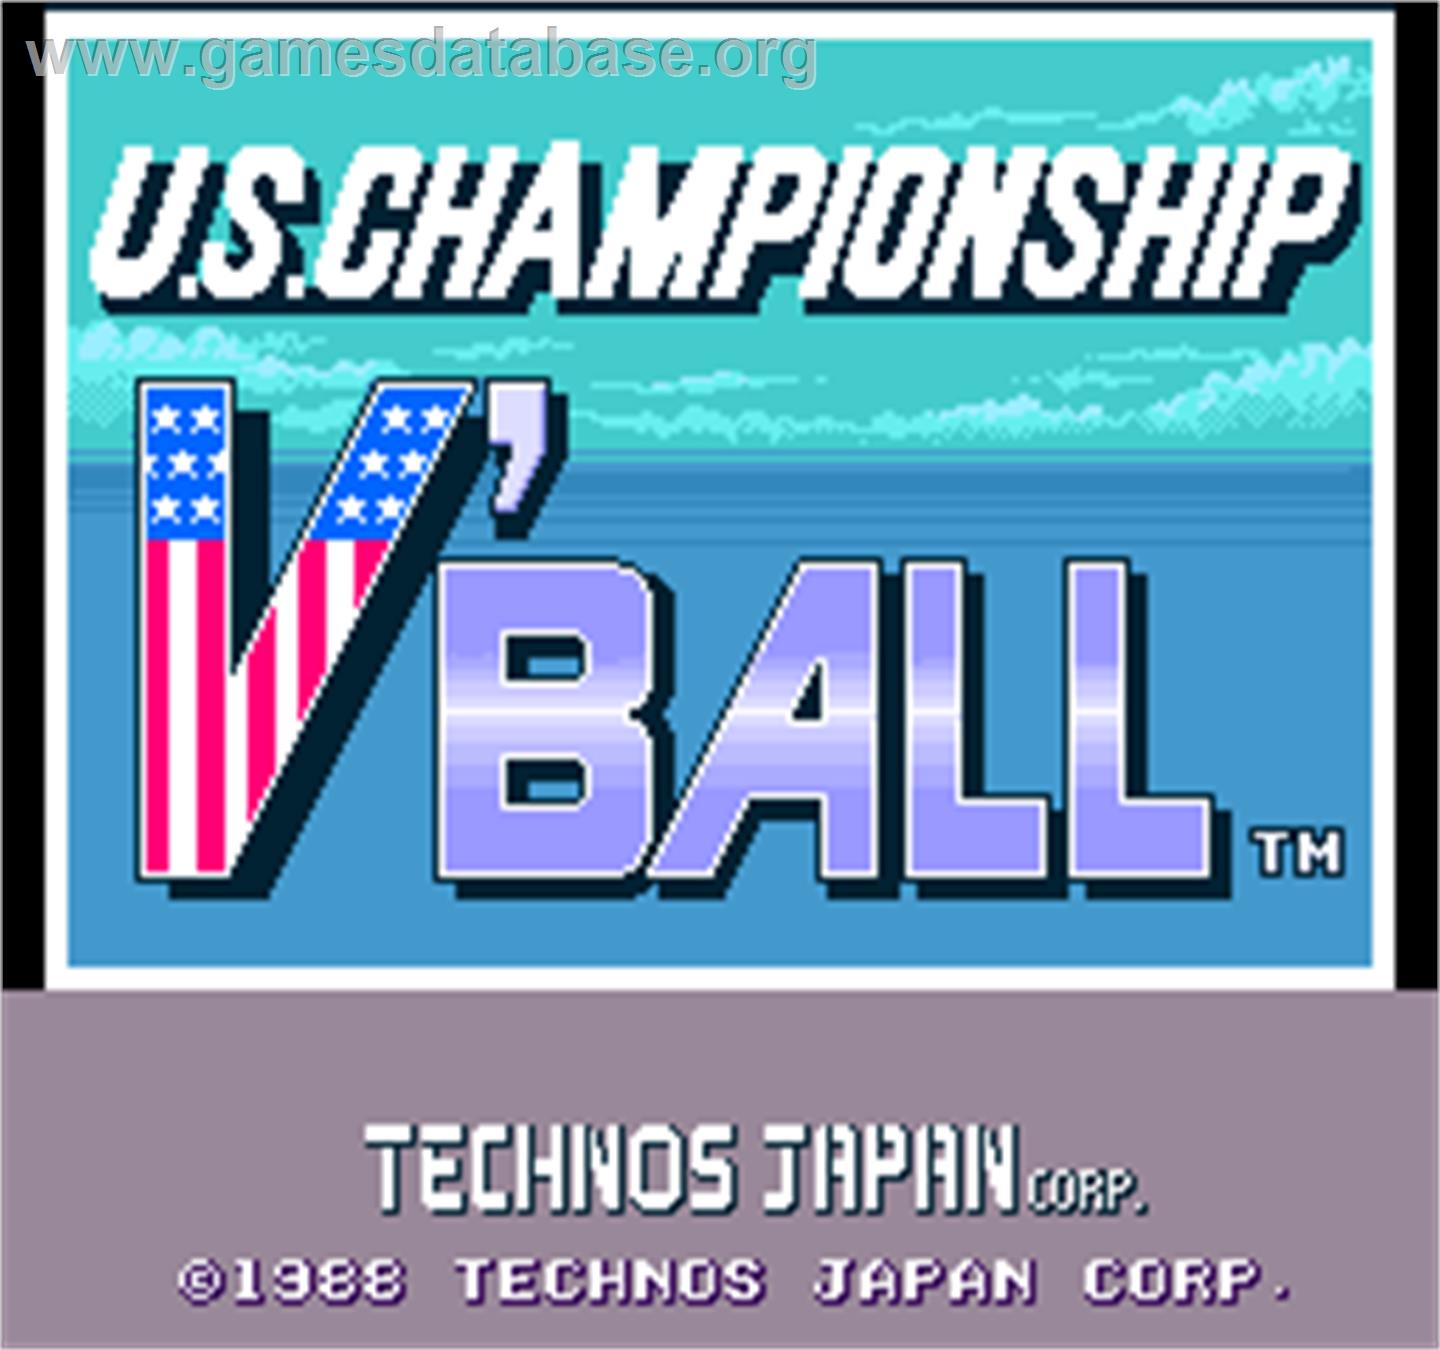 U.S. Championship V'ball - Arcade - Artwork - Title Screen